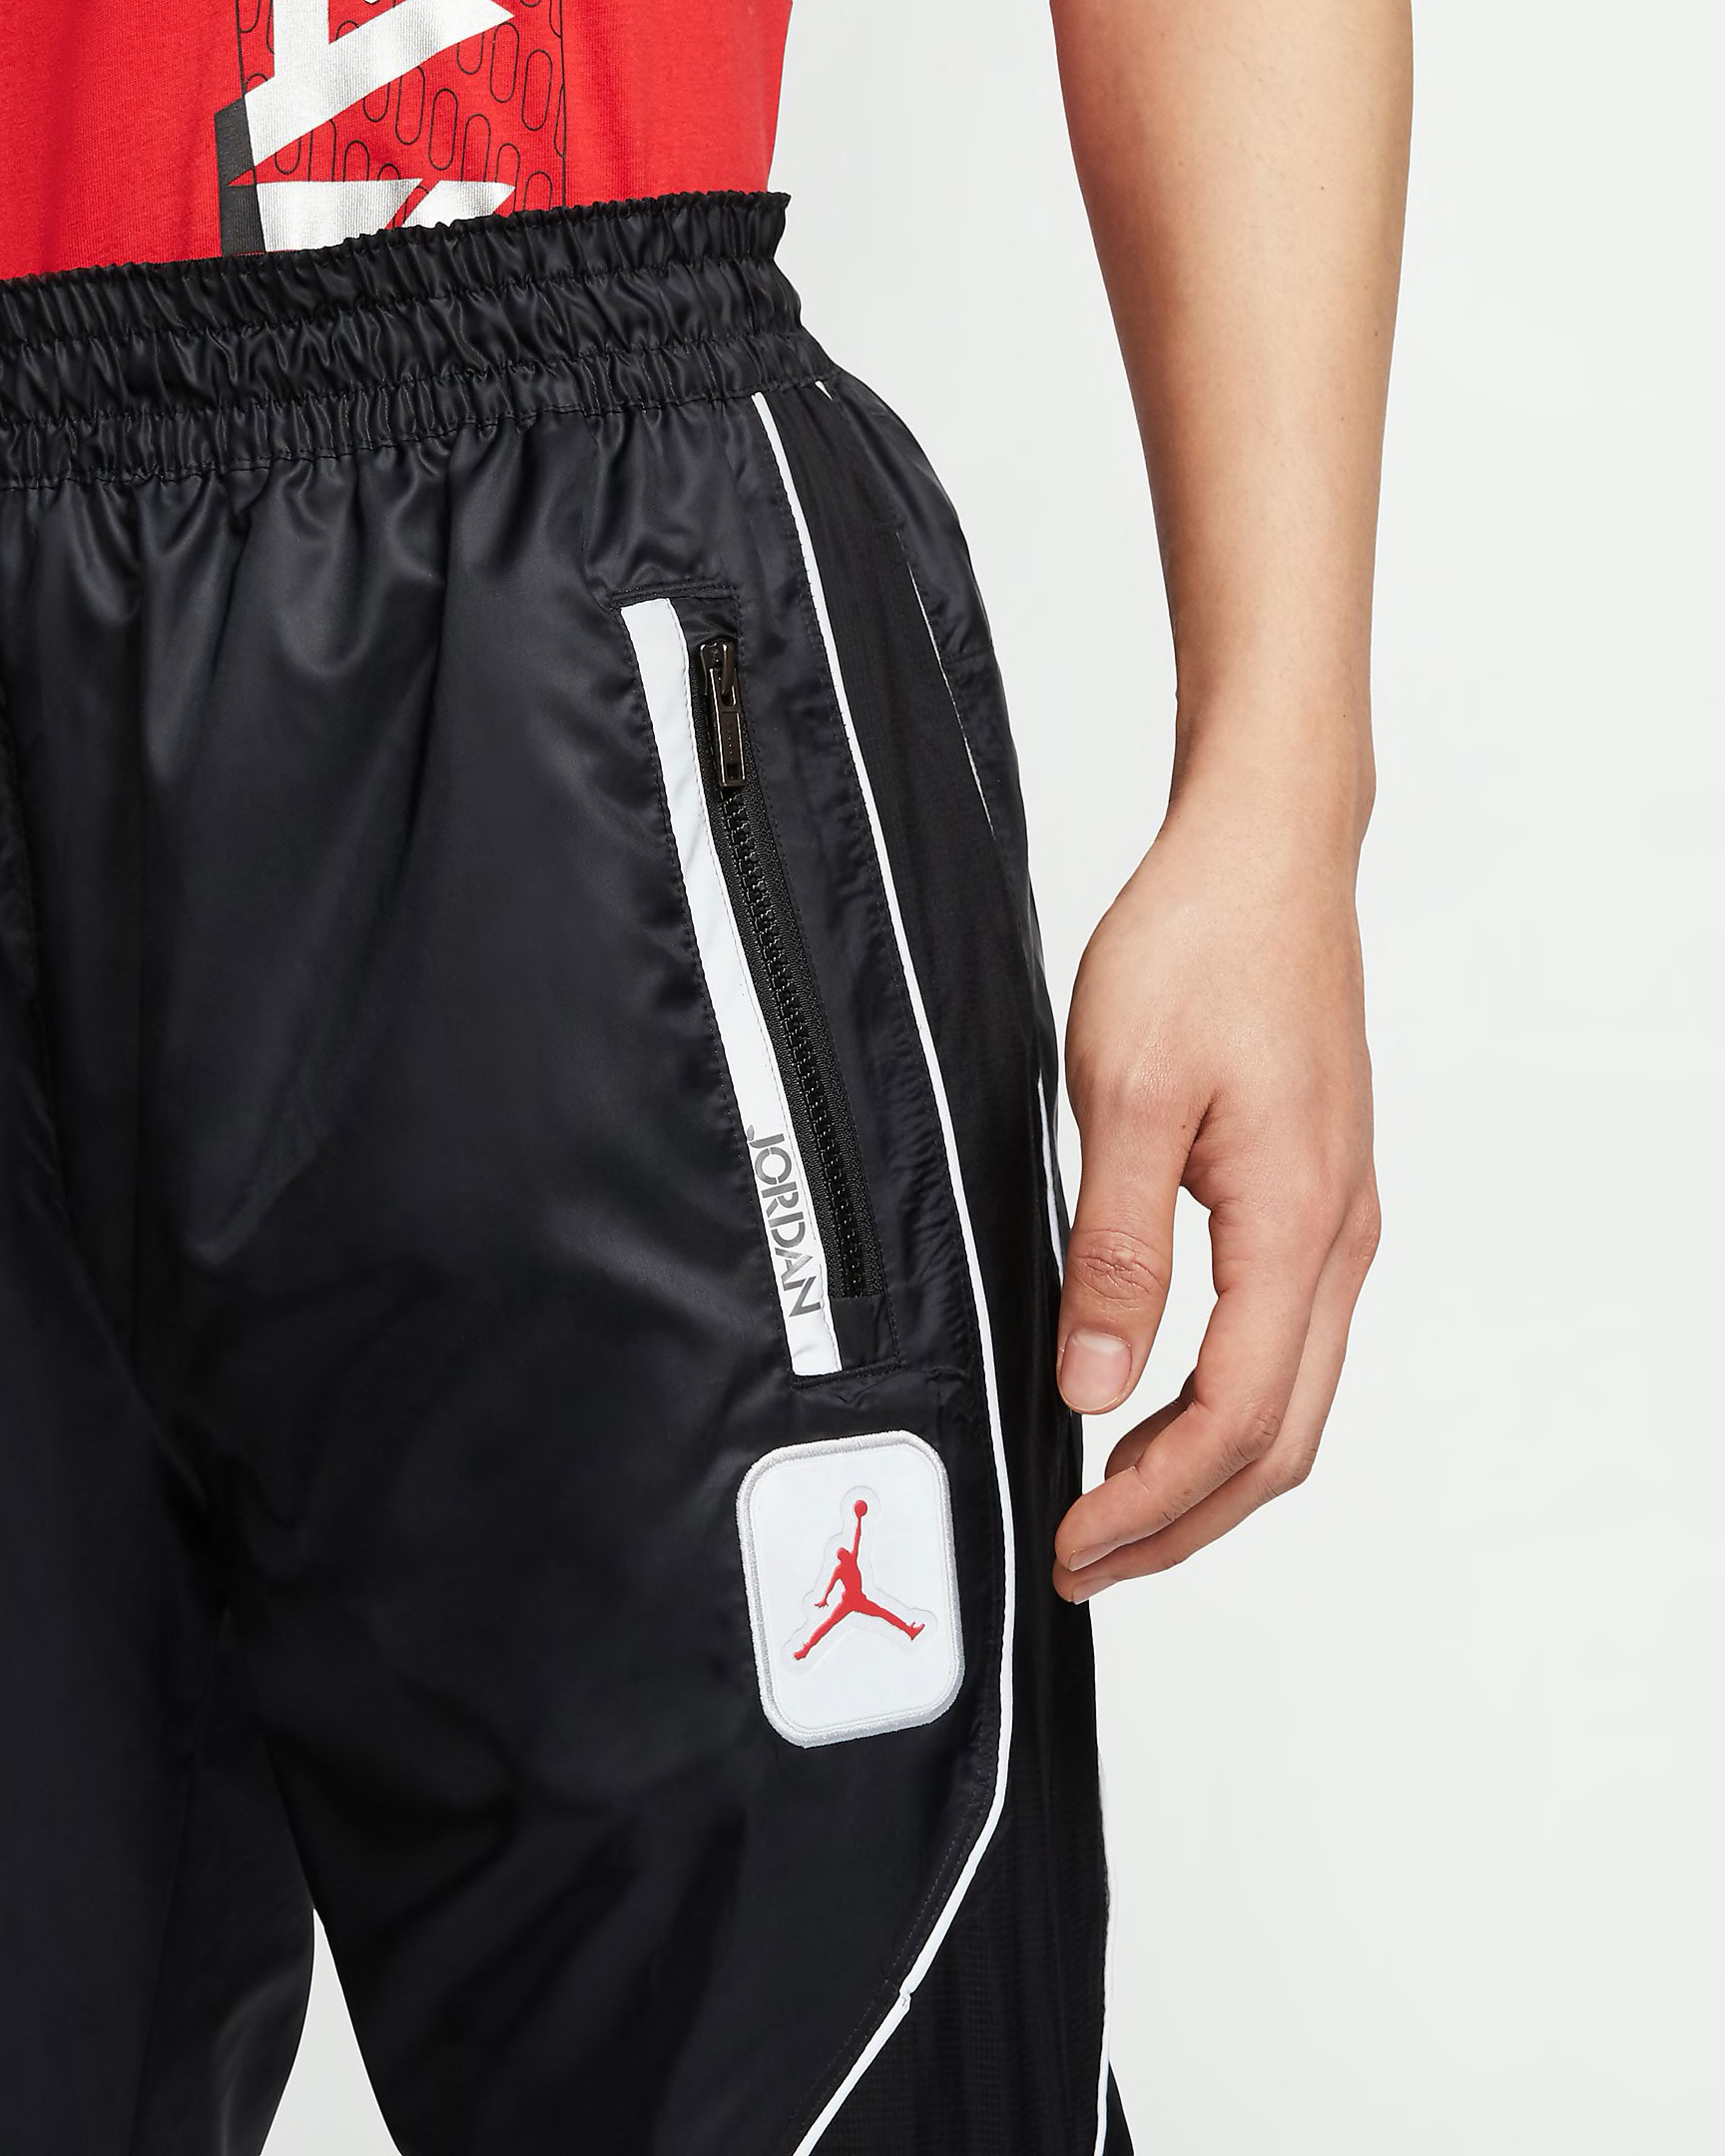 Air Jordan 5 Fire Red Reflective Pants | SneakerFits.com